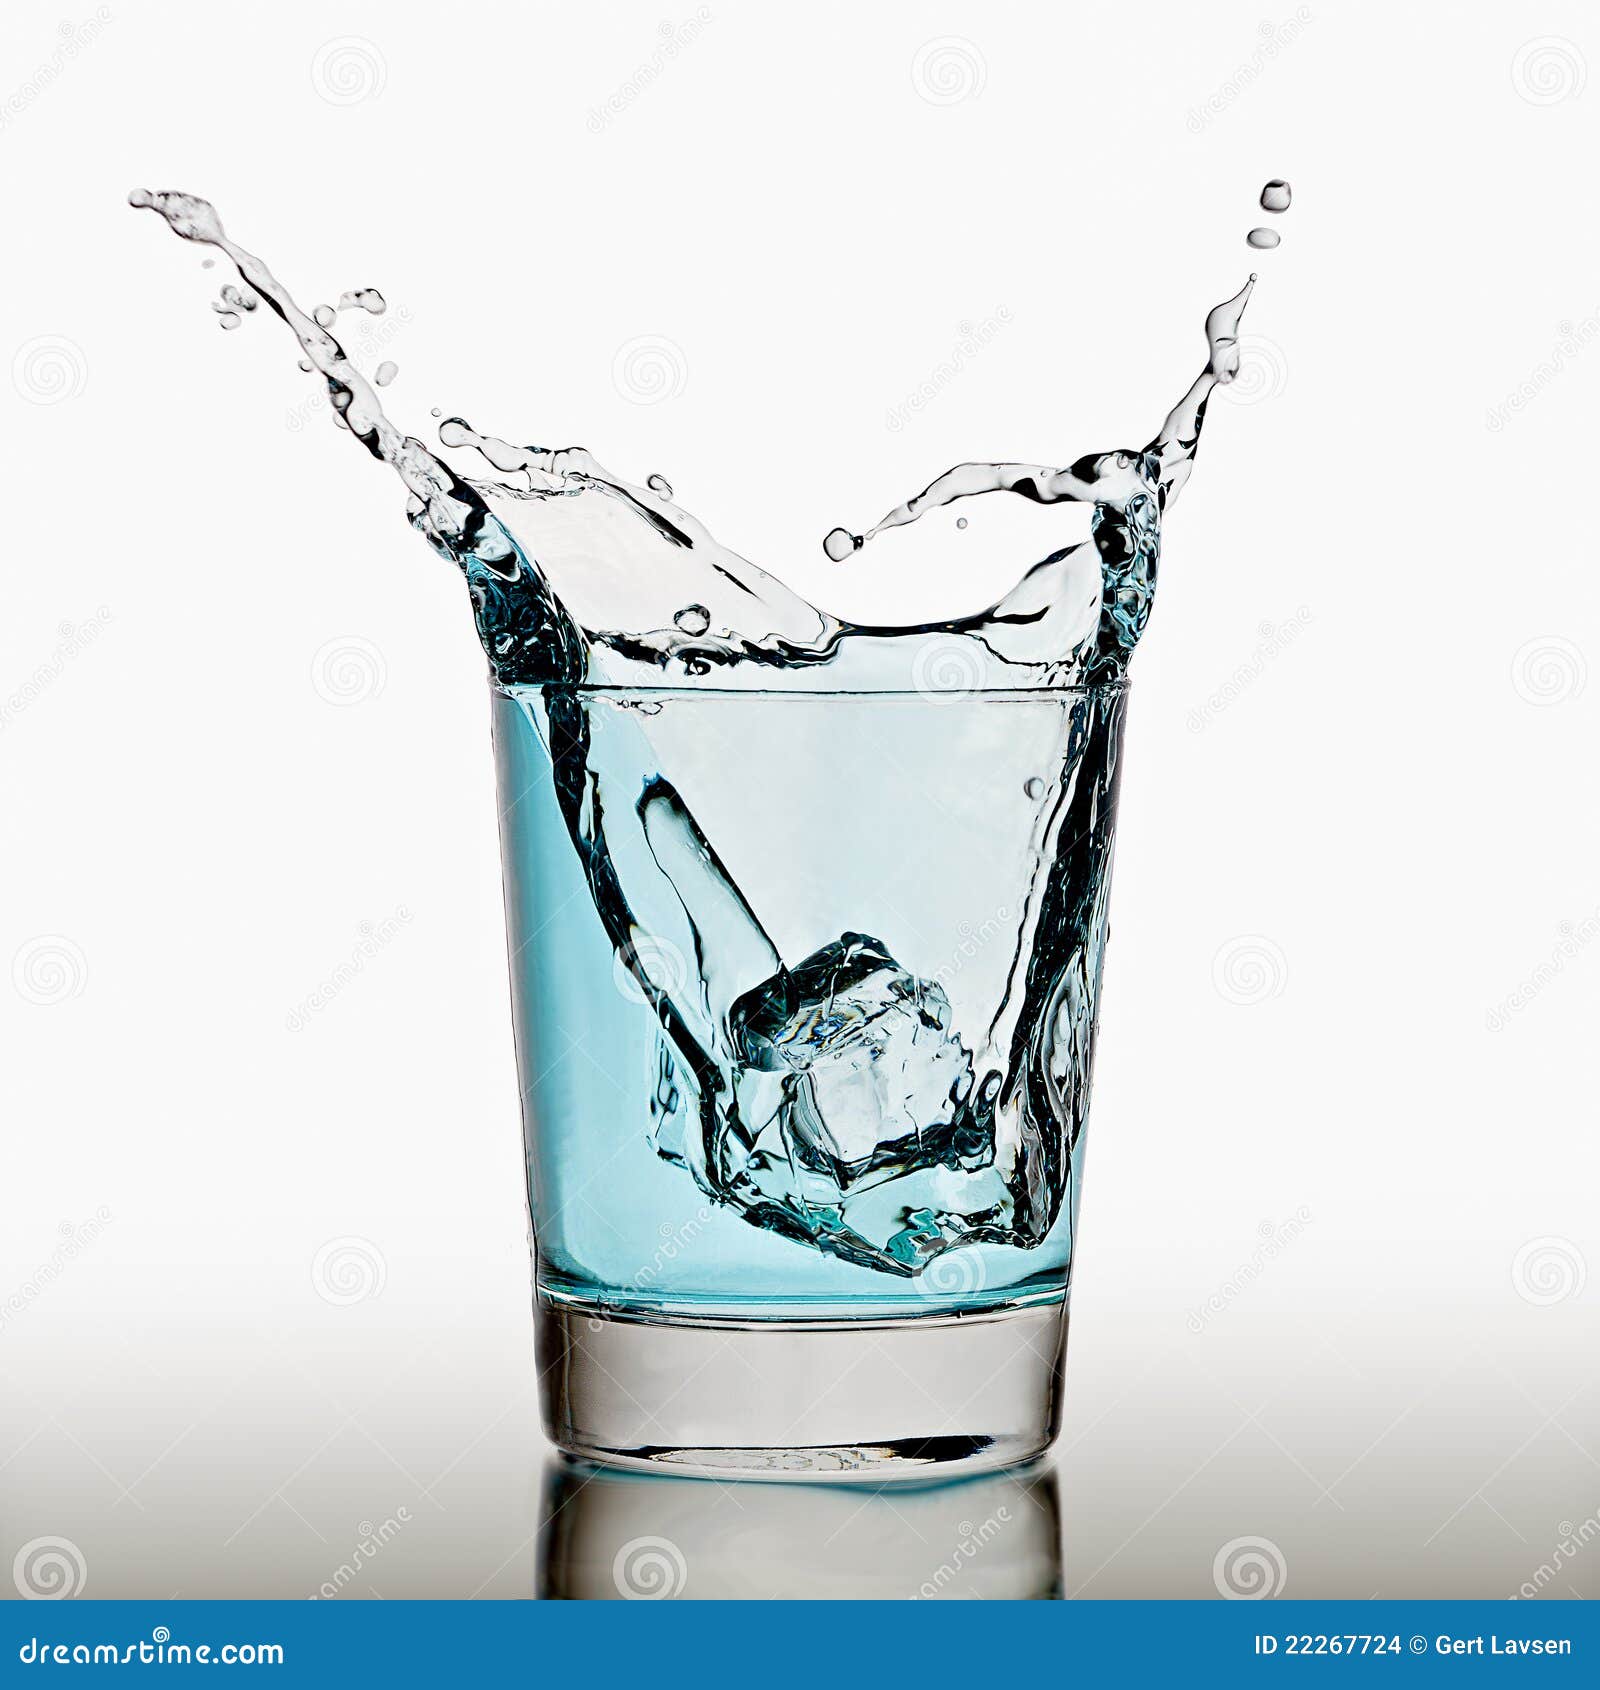 https://thumbs.dreamstime.com/z/ice-cubes-splashing-glass-water-22267724.jpg